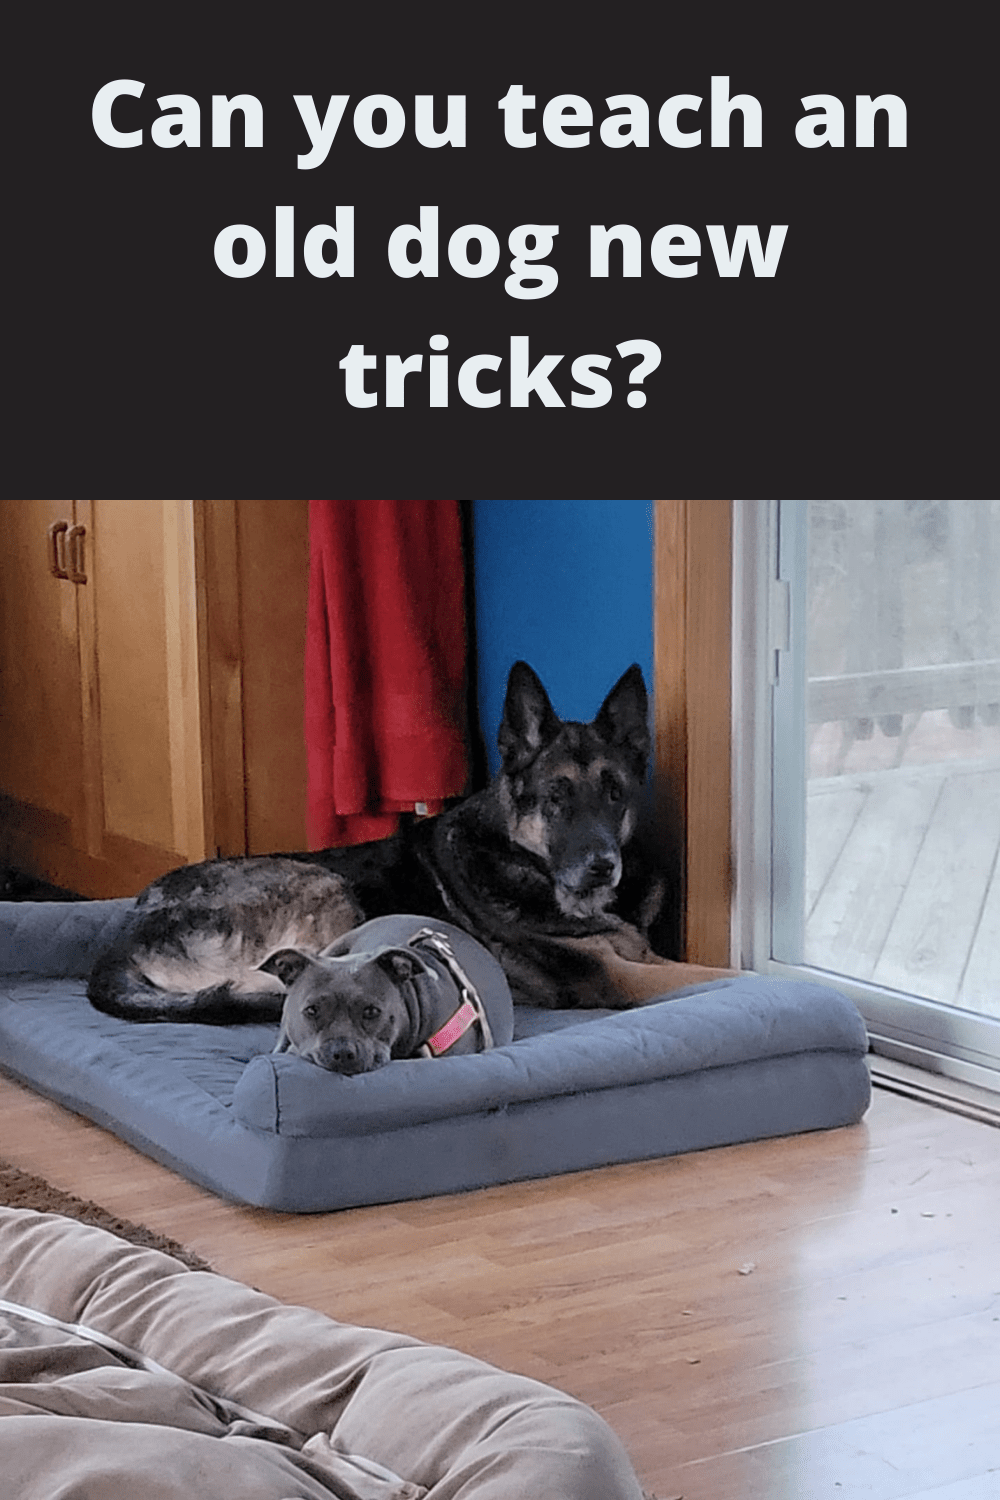 Can you teach an old dog new tricks?